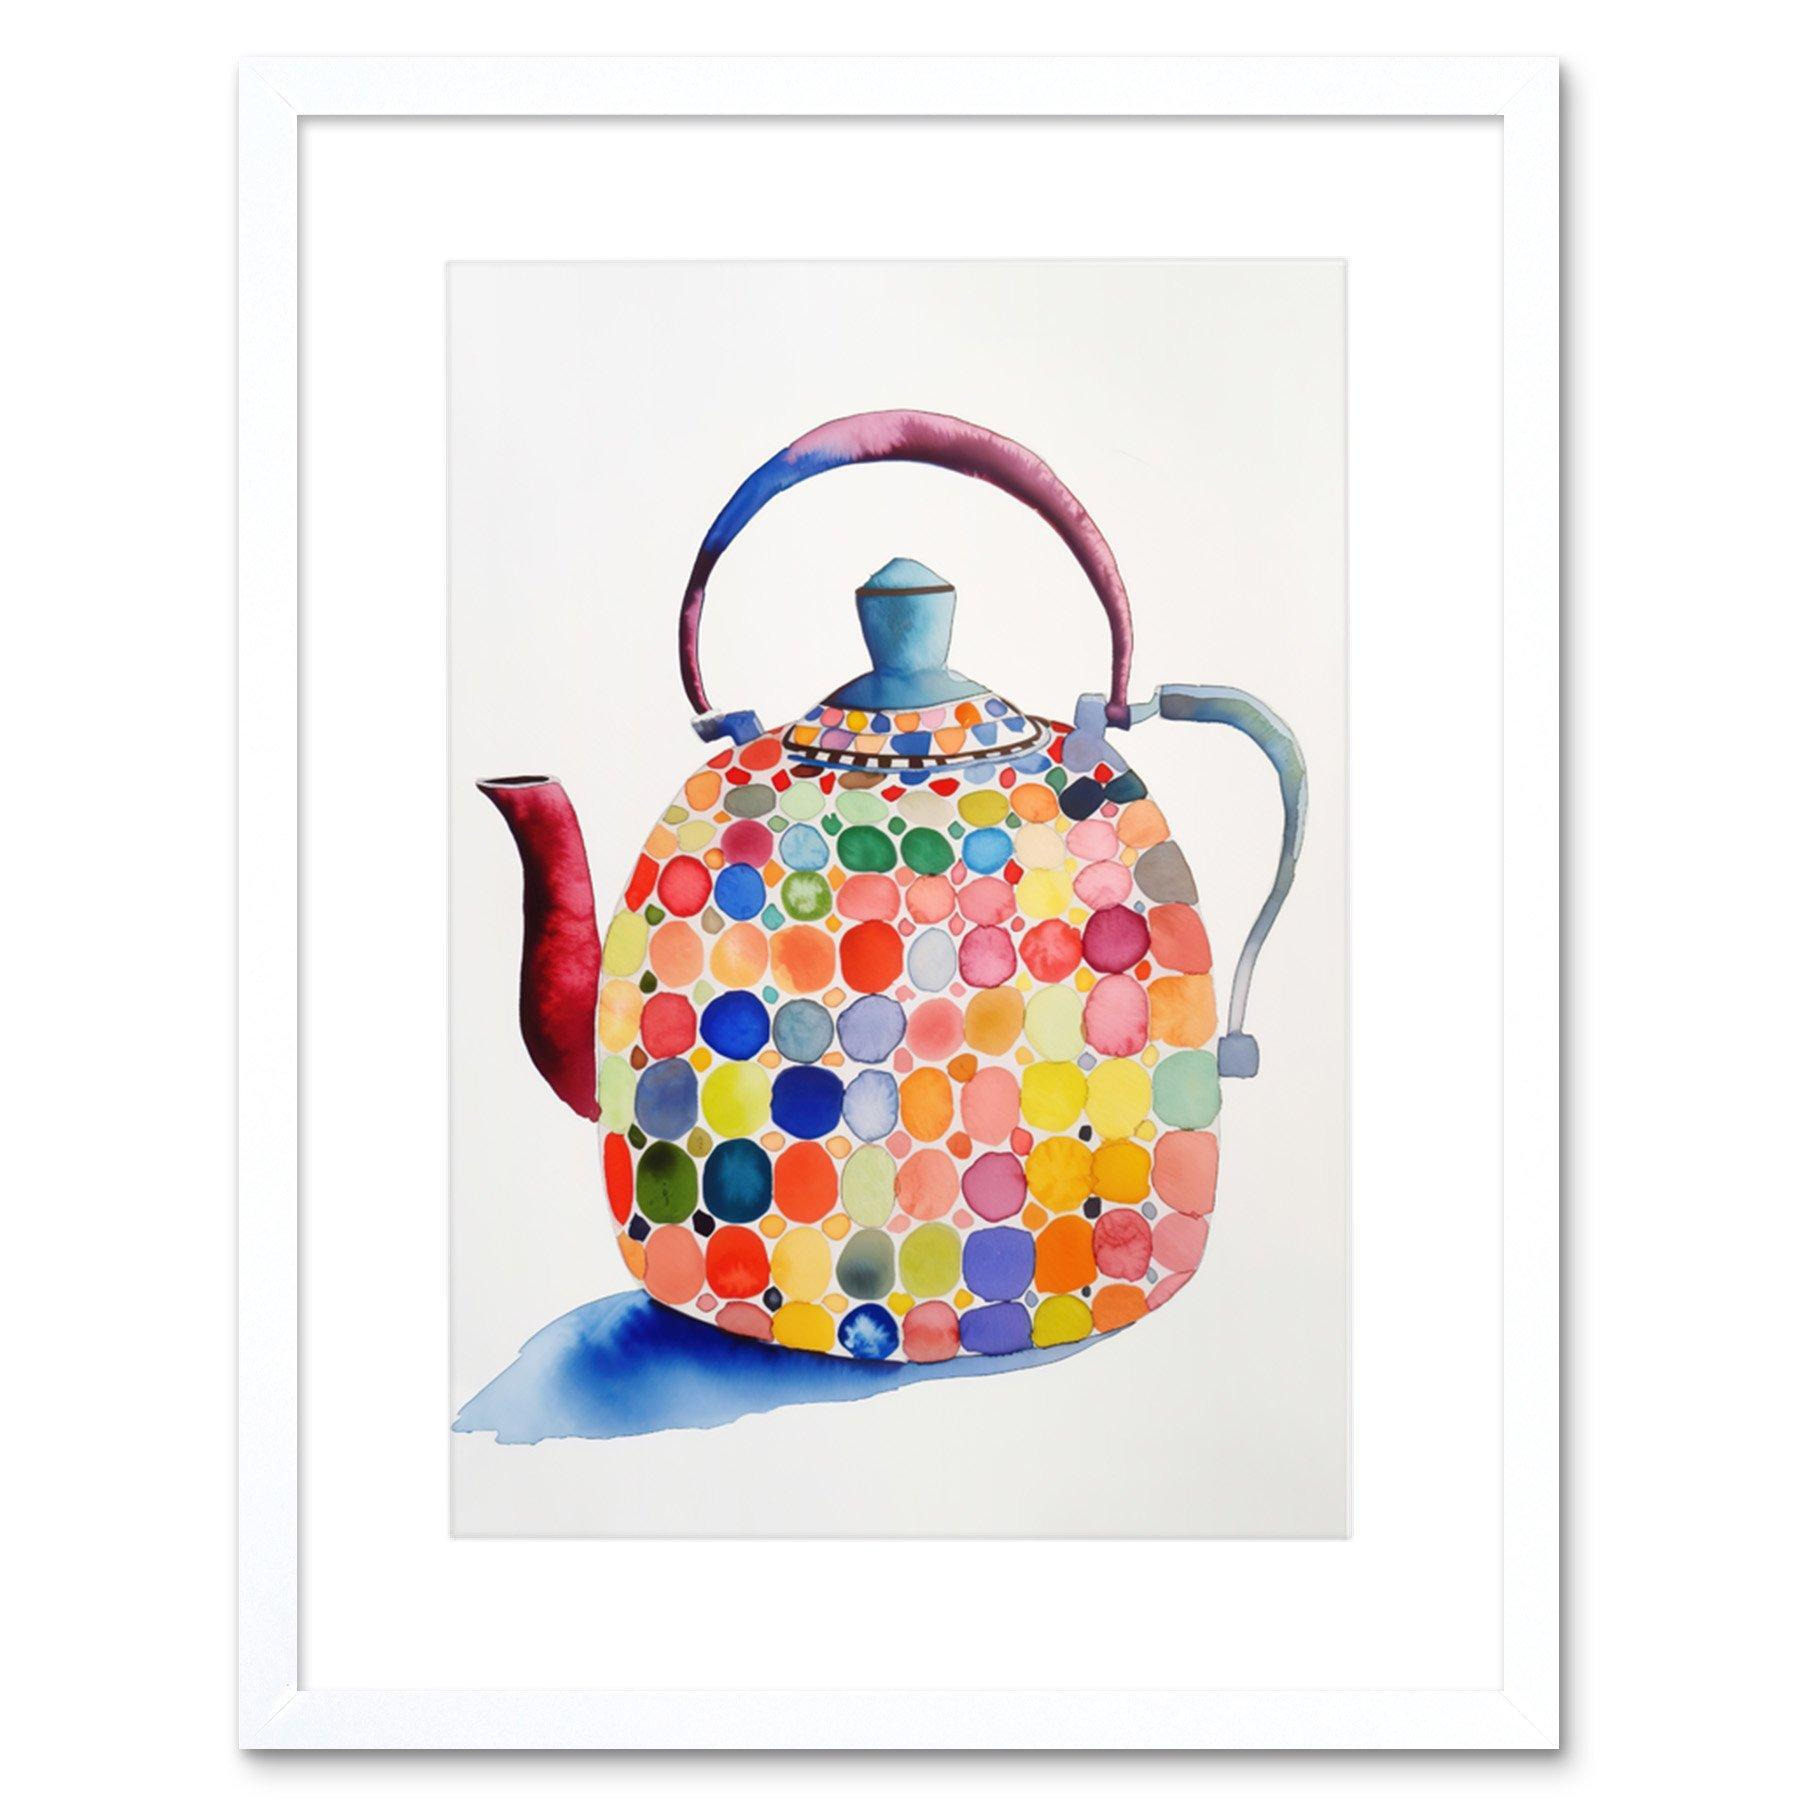 Wall Art Print Colourful Enamelled Teapot Tea Kettle Folk Art Watercolour Painting Artwork Framed 9X7 Inch - image 1